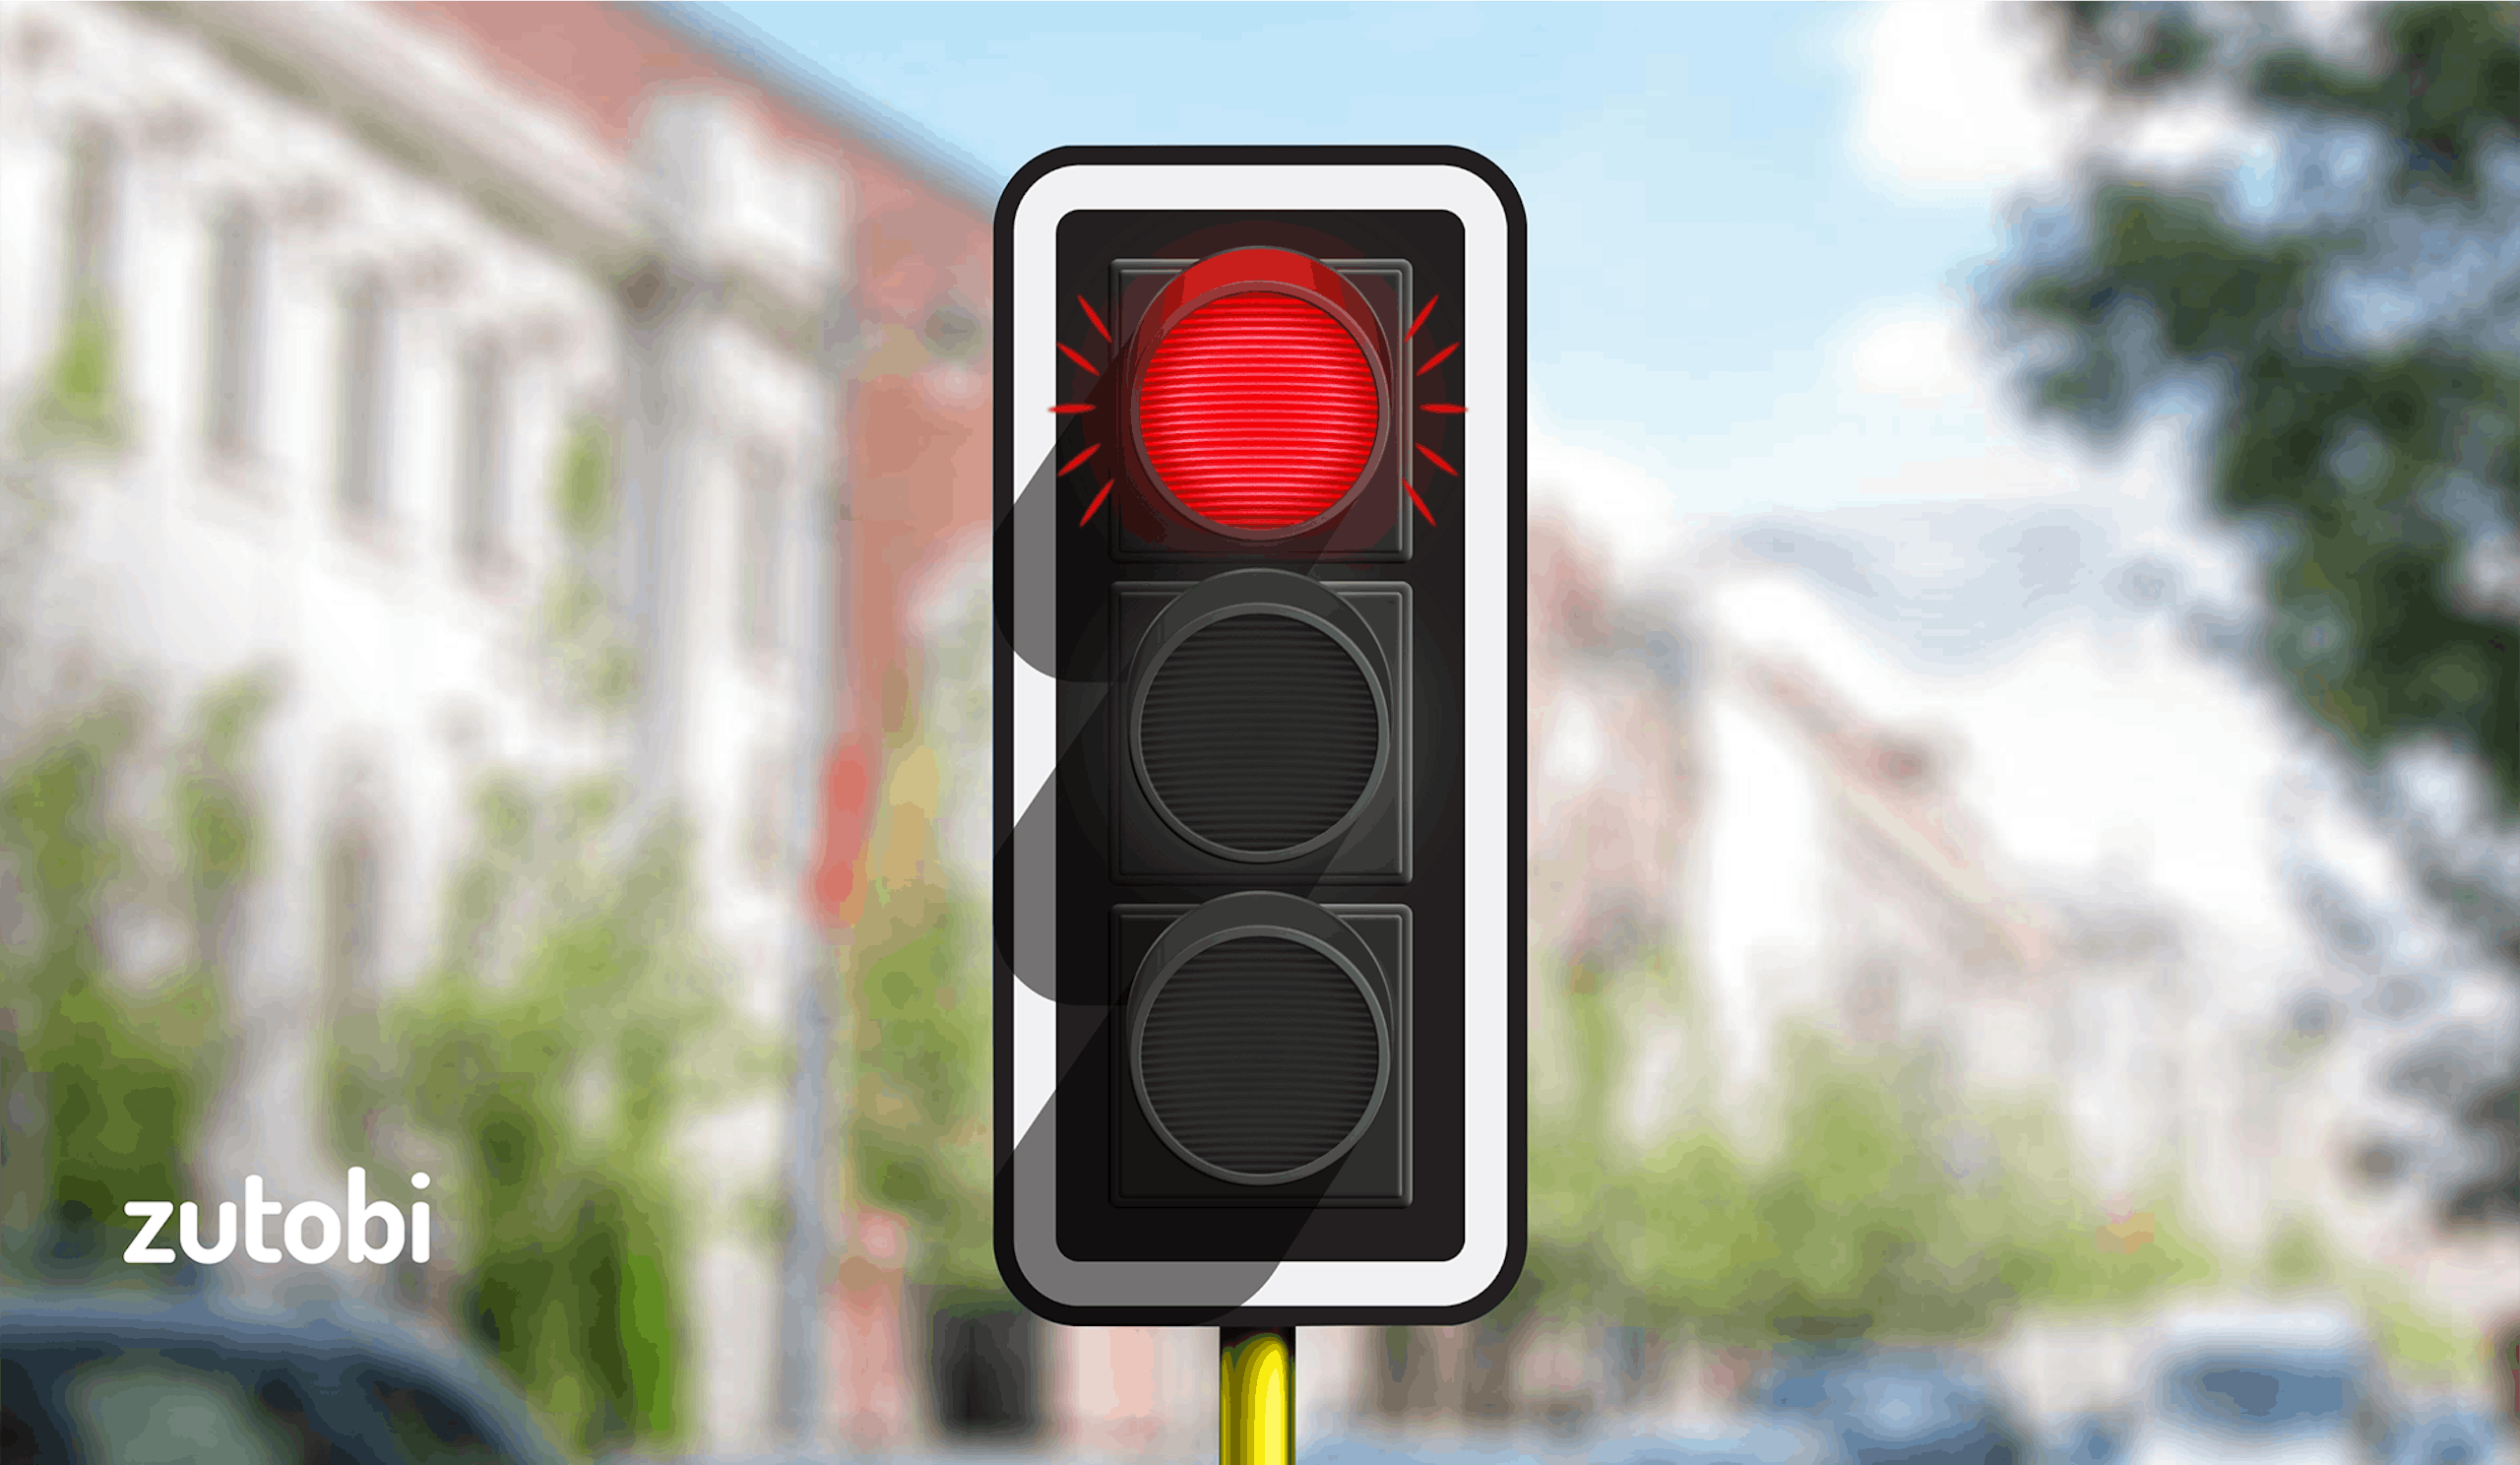 Traffic Signals Rules: Flashing Lights, Arrows, Lane Signals